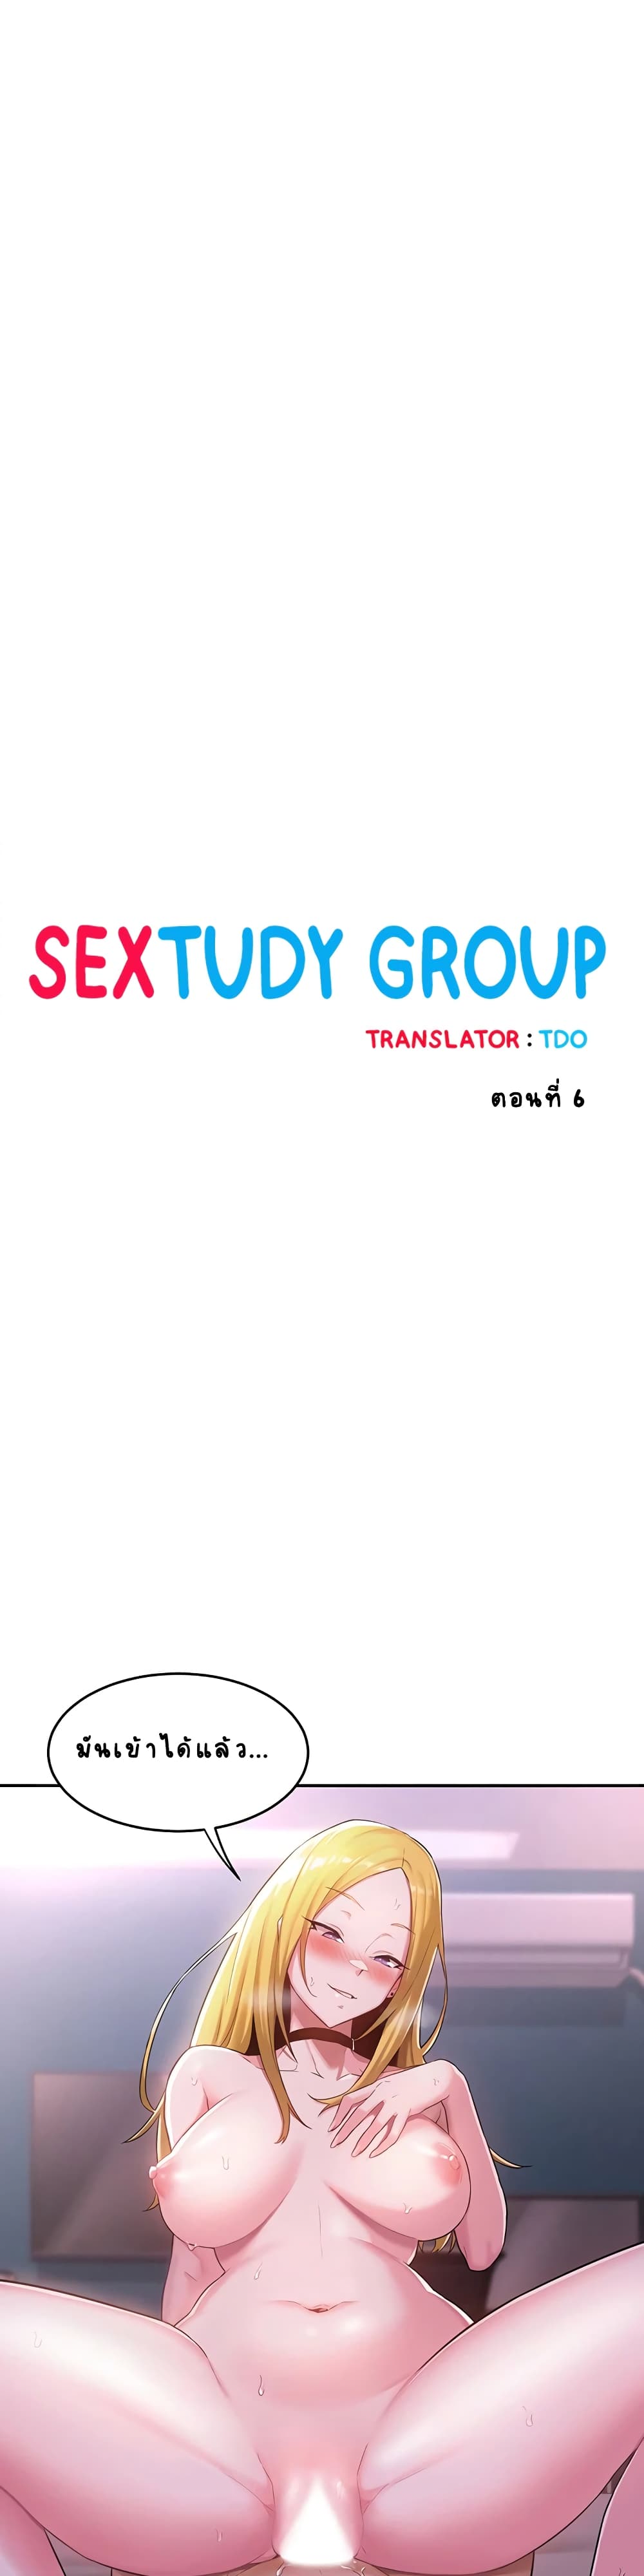 Sextudy Group 6-6